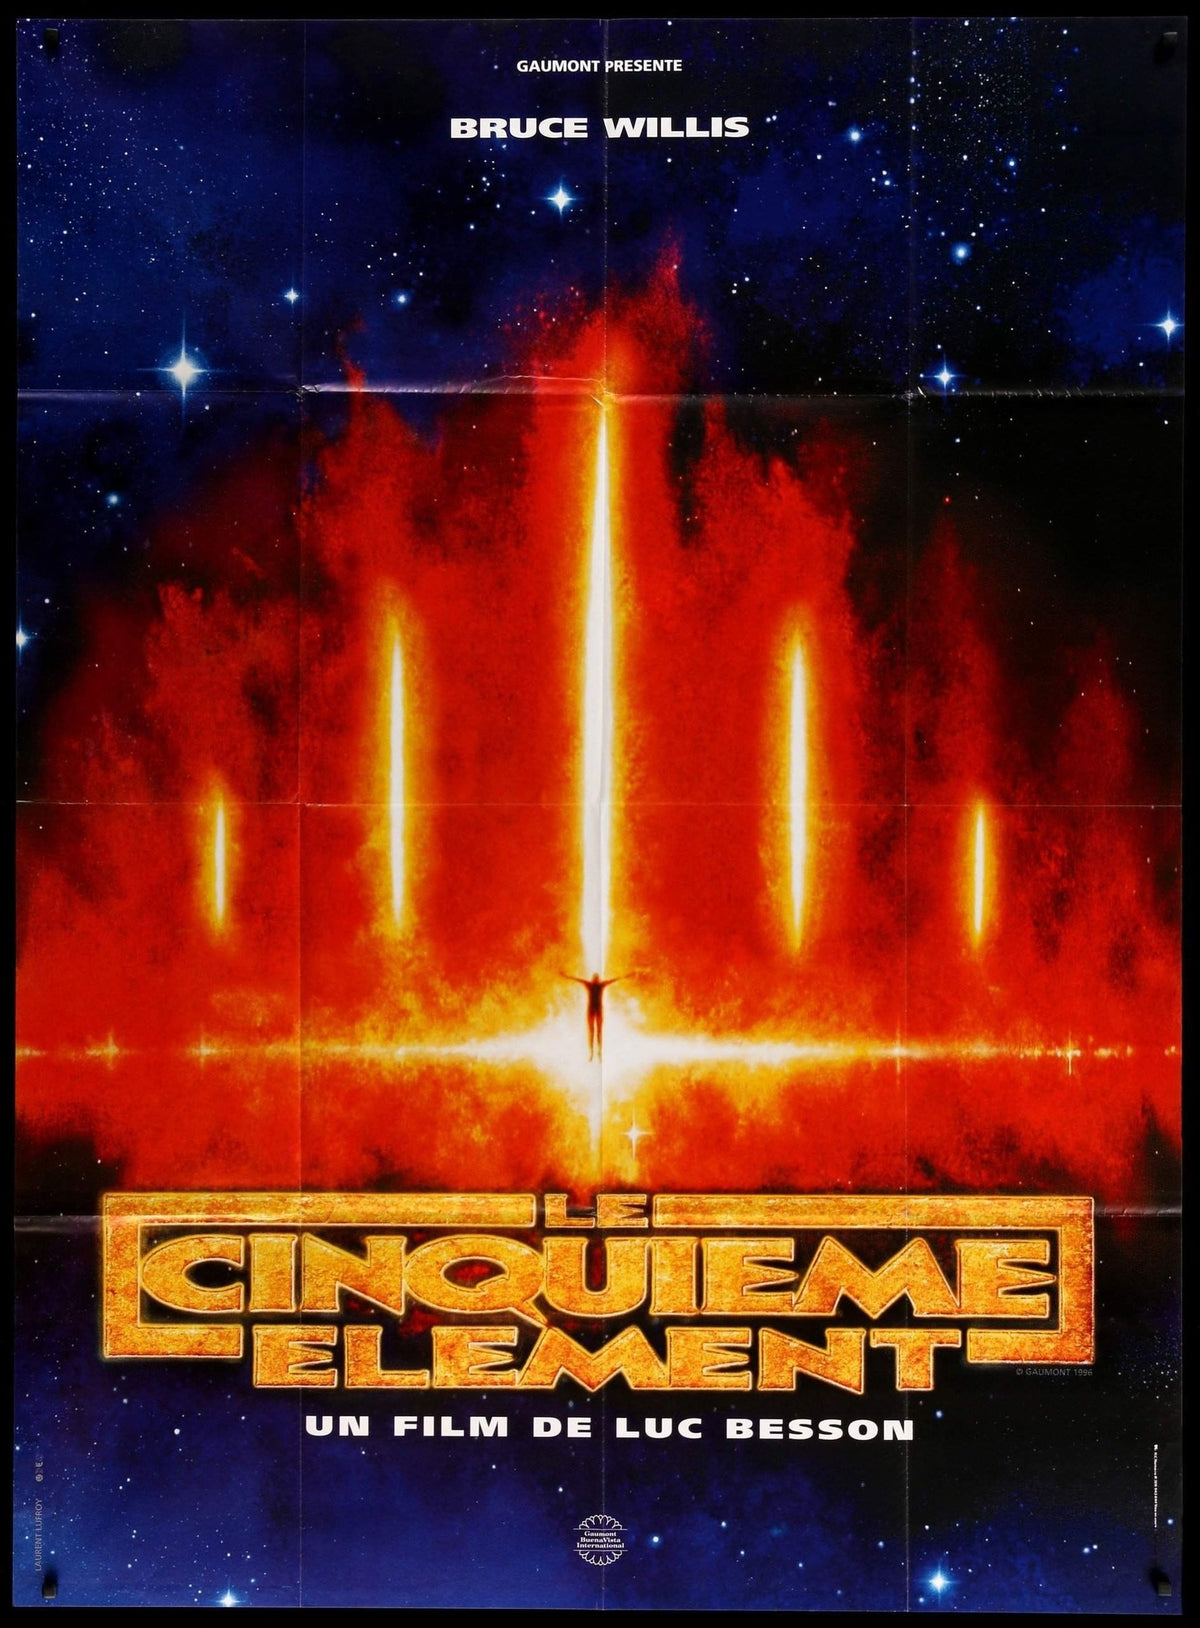 Fifth Element (1997) original movie poster for sale at Original Film Art